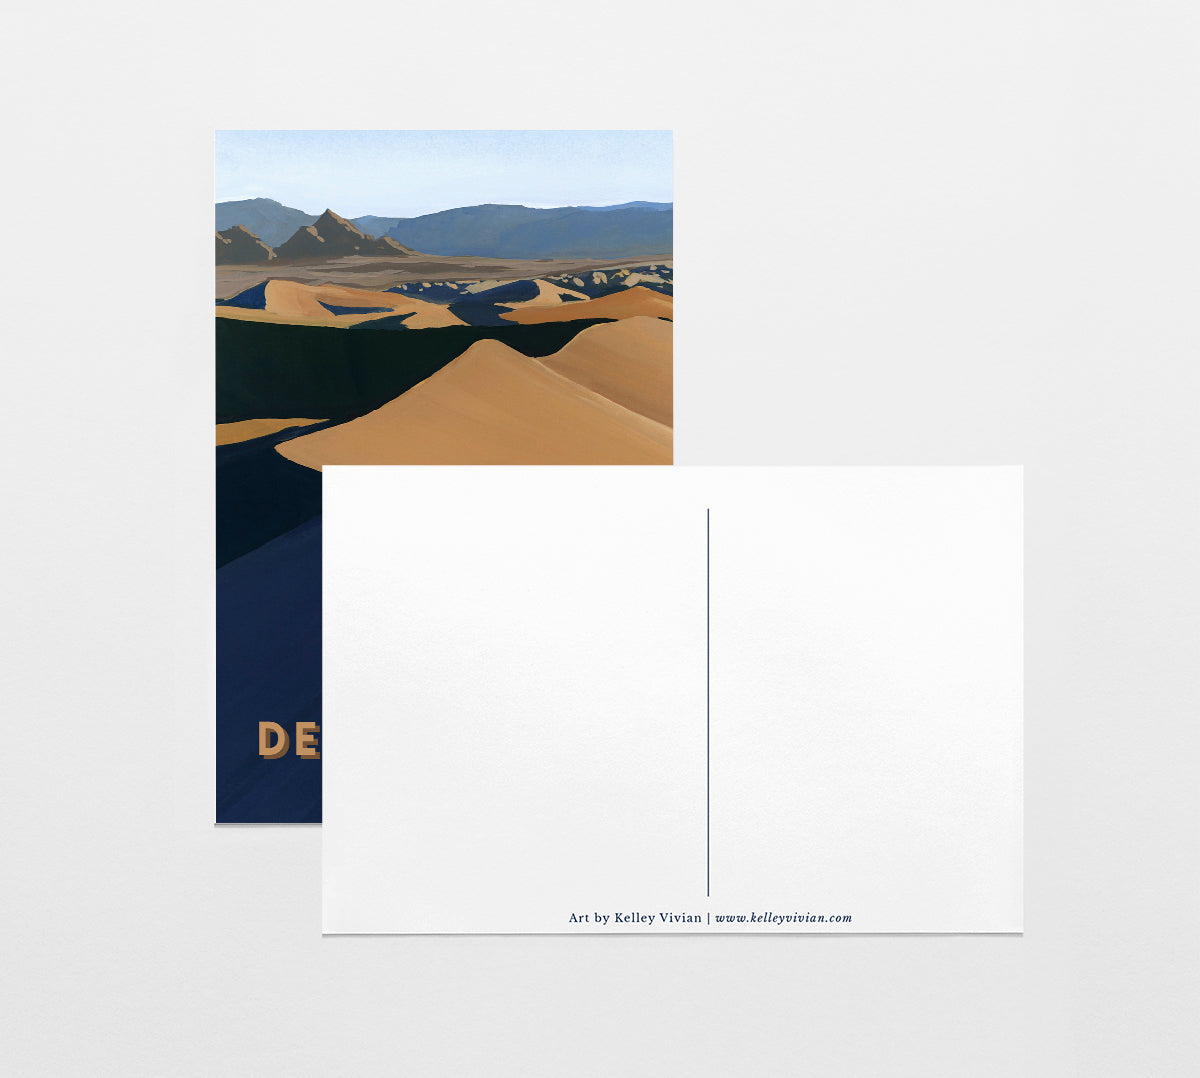 'Death Valley' National Park Travel Poster Postcard